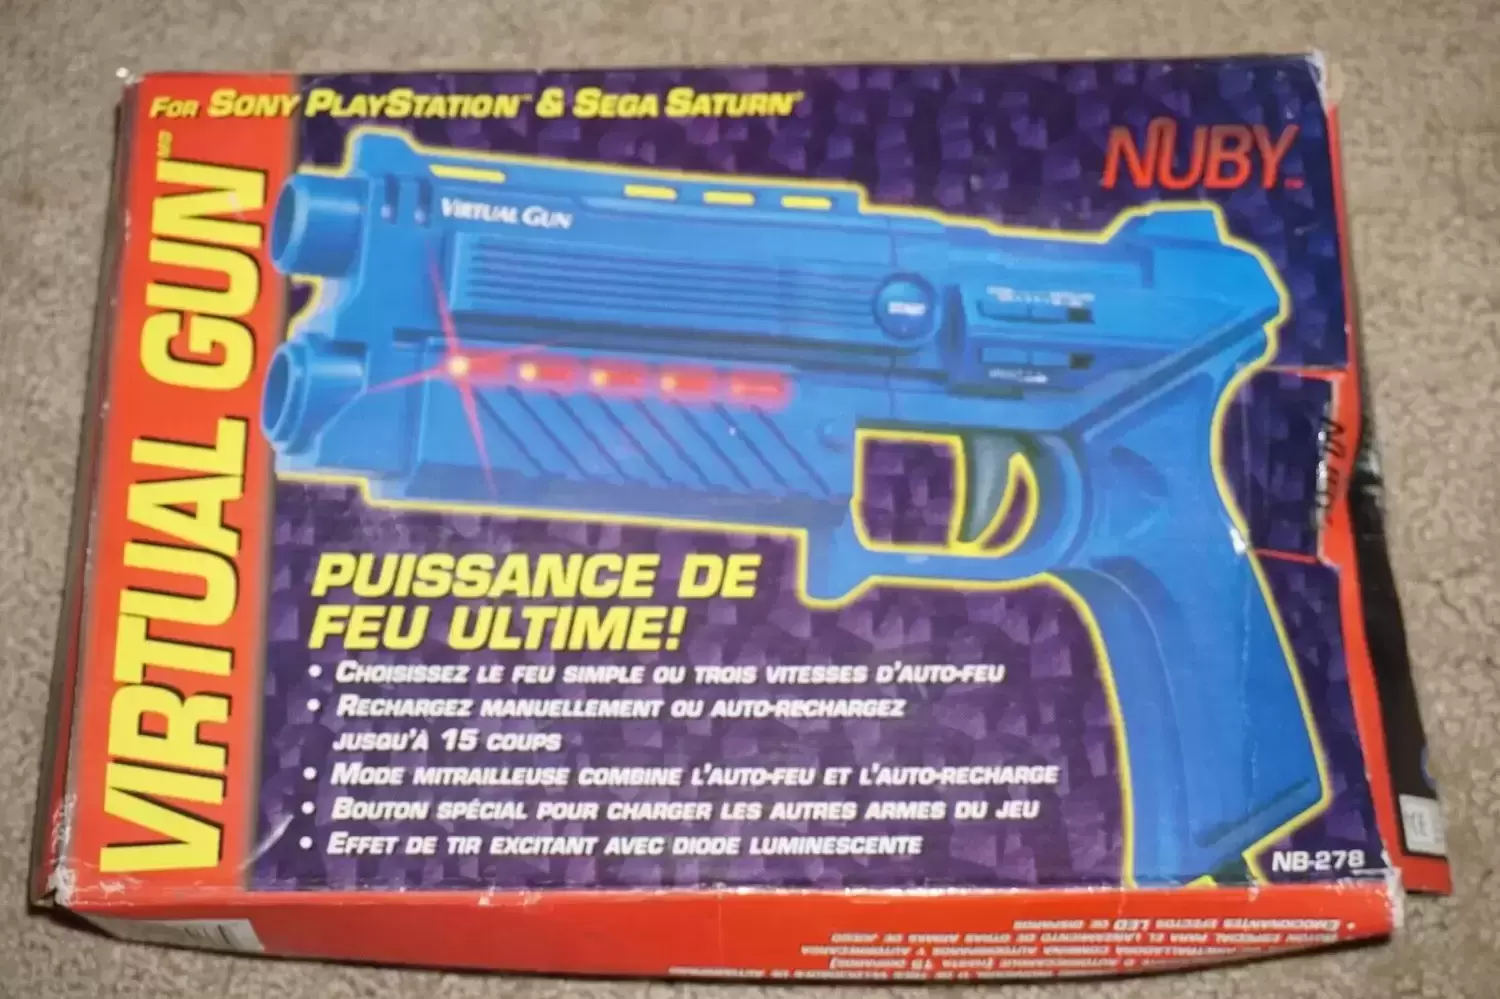 Matériel PlayStation - NUBY Virtual Gun